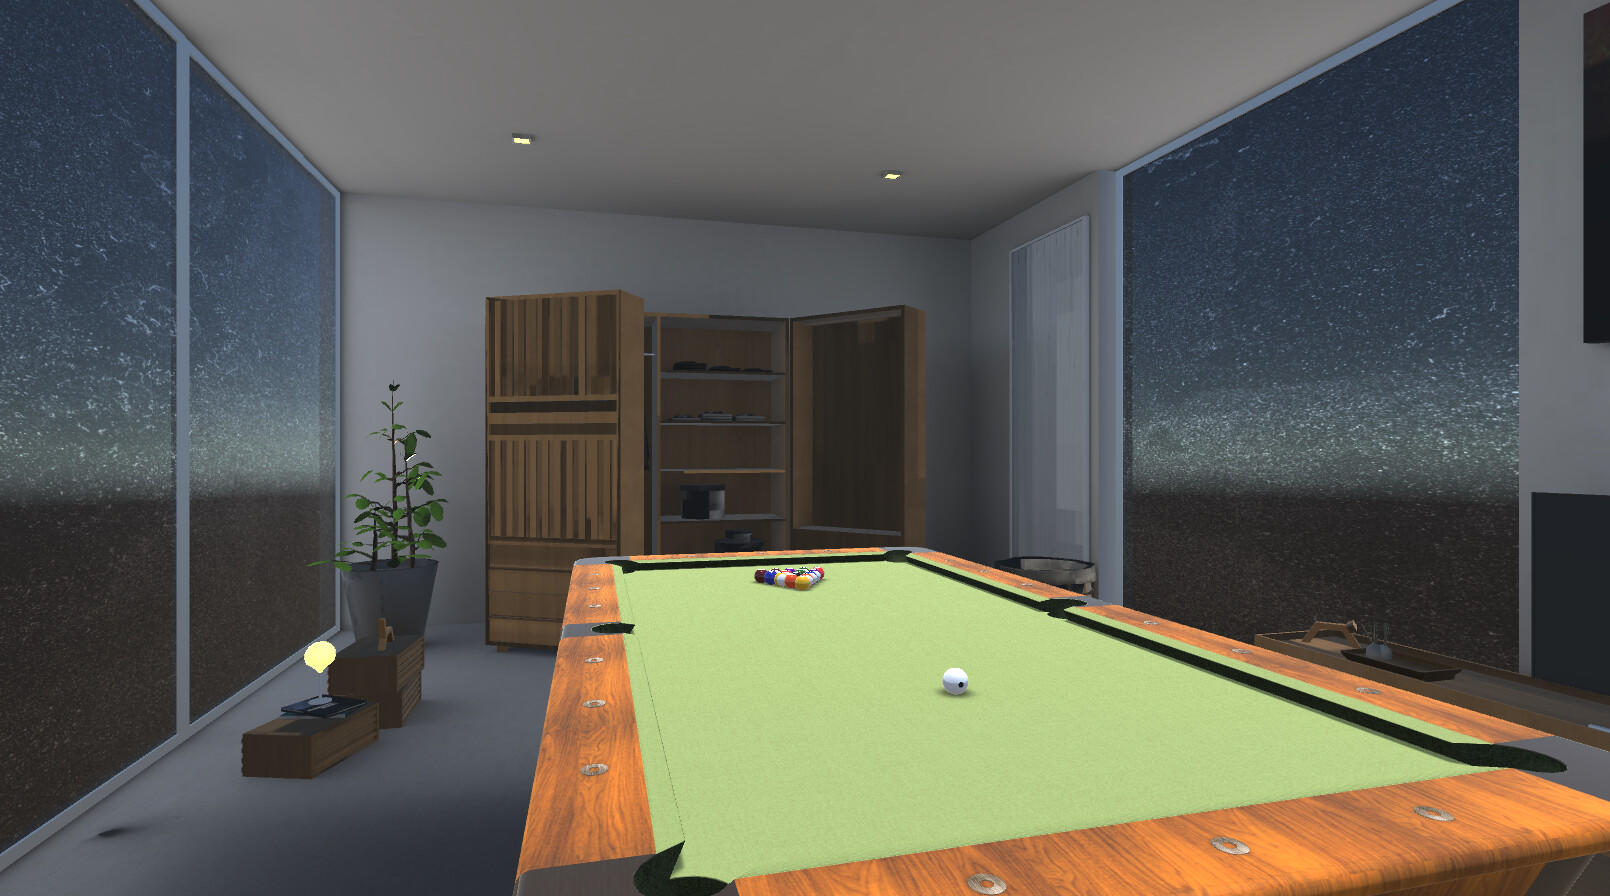 Pocketing the ball-Billiards Simulator 게임 스크린 샷